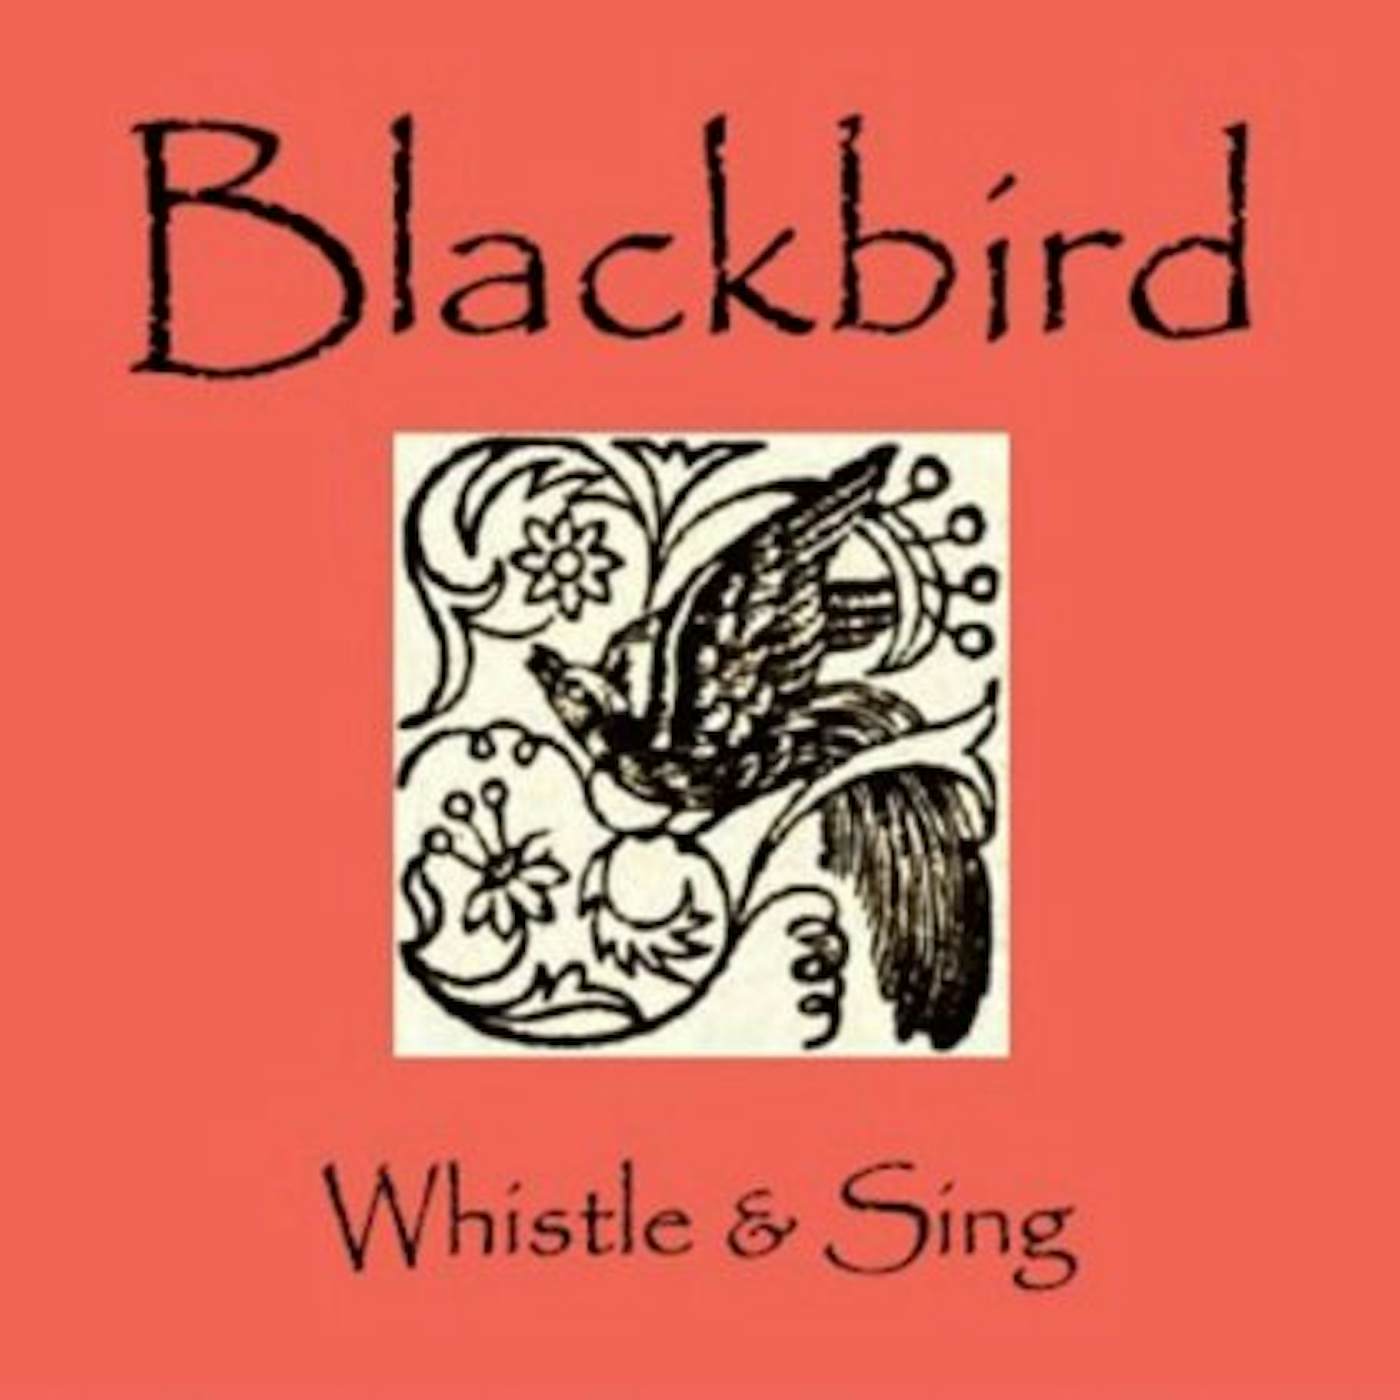 Blackbird WHISTLE & SING CD